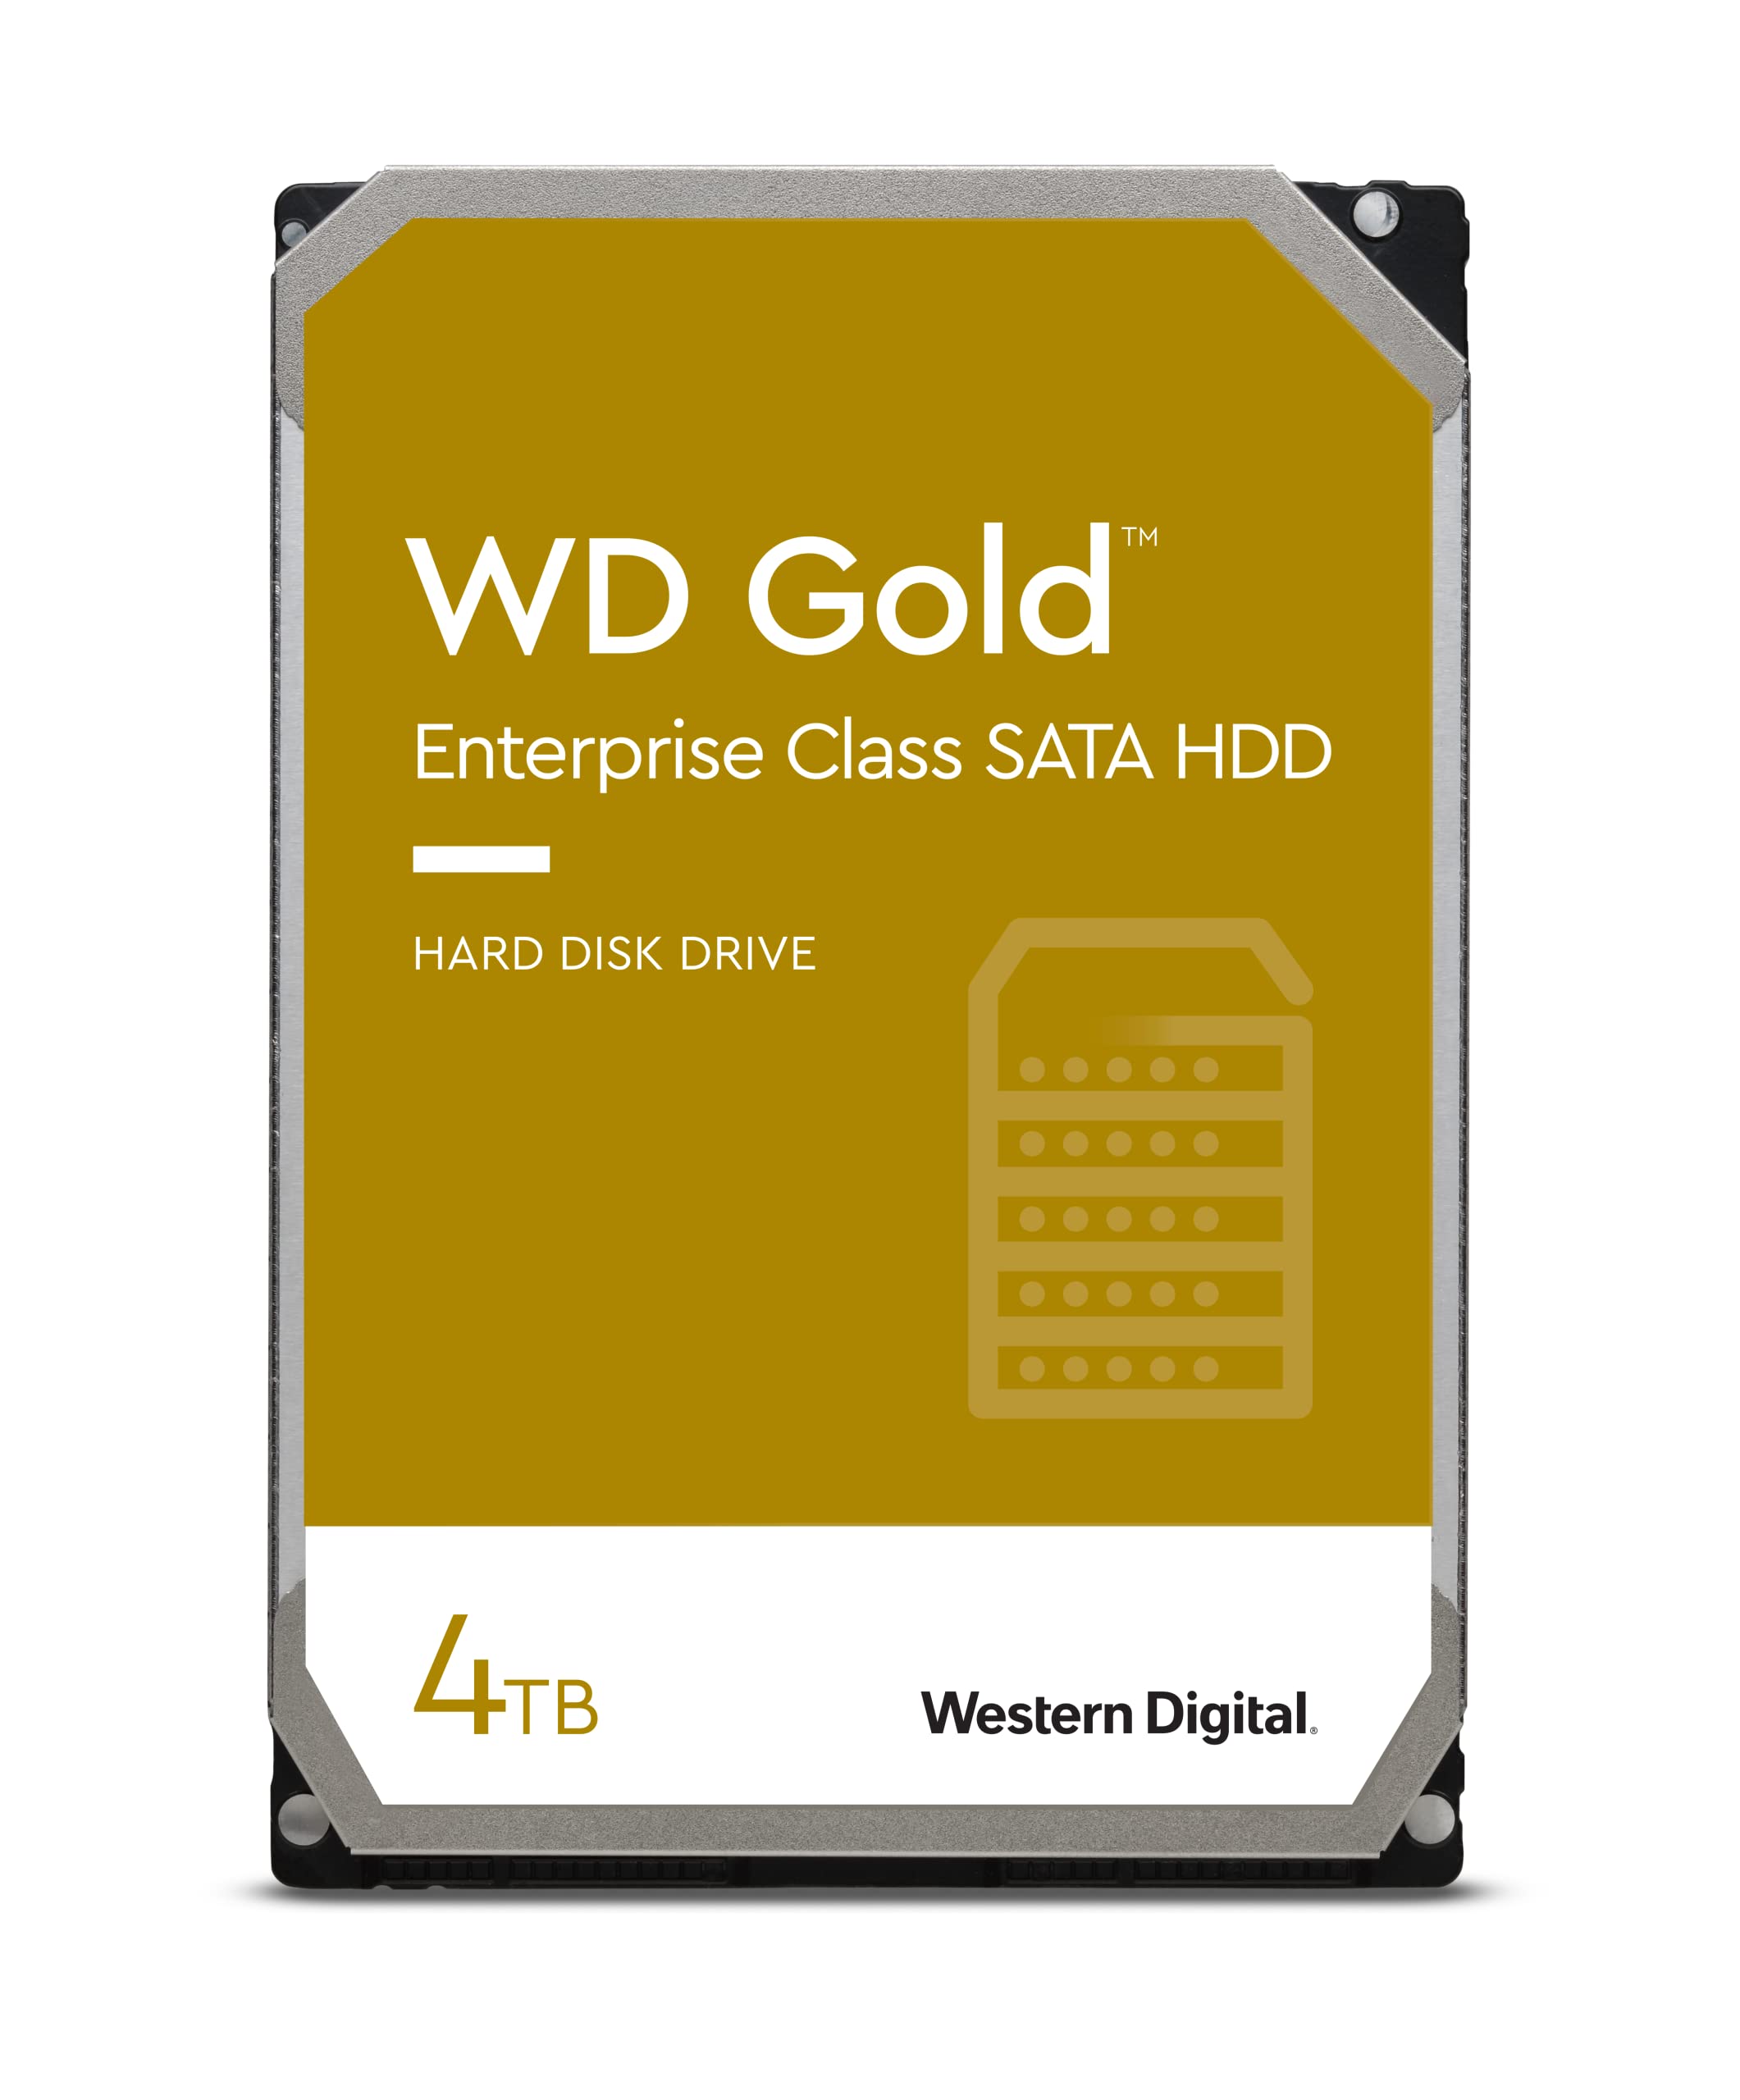 WD Gold 4 TB Hard Drive